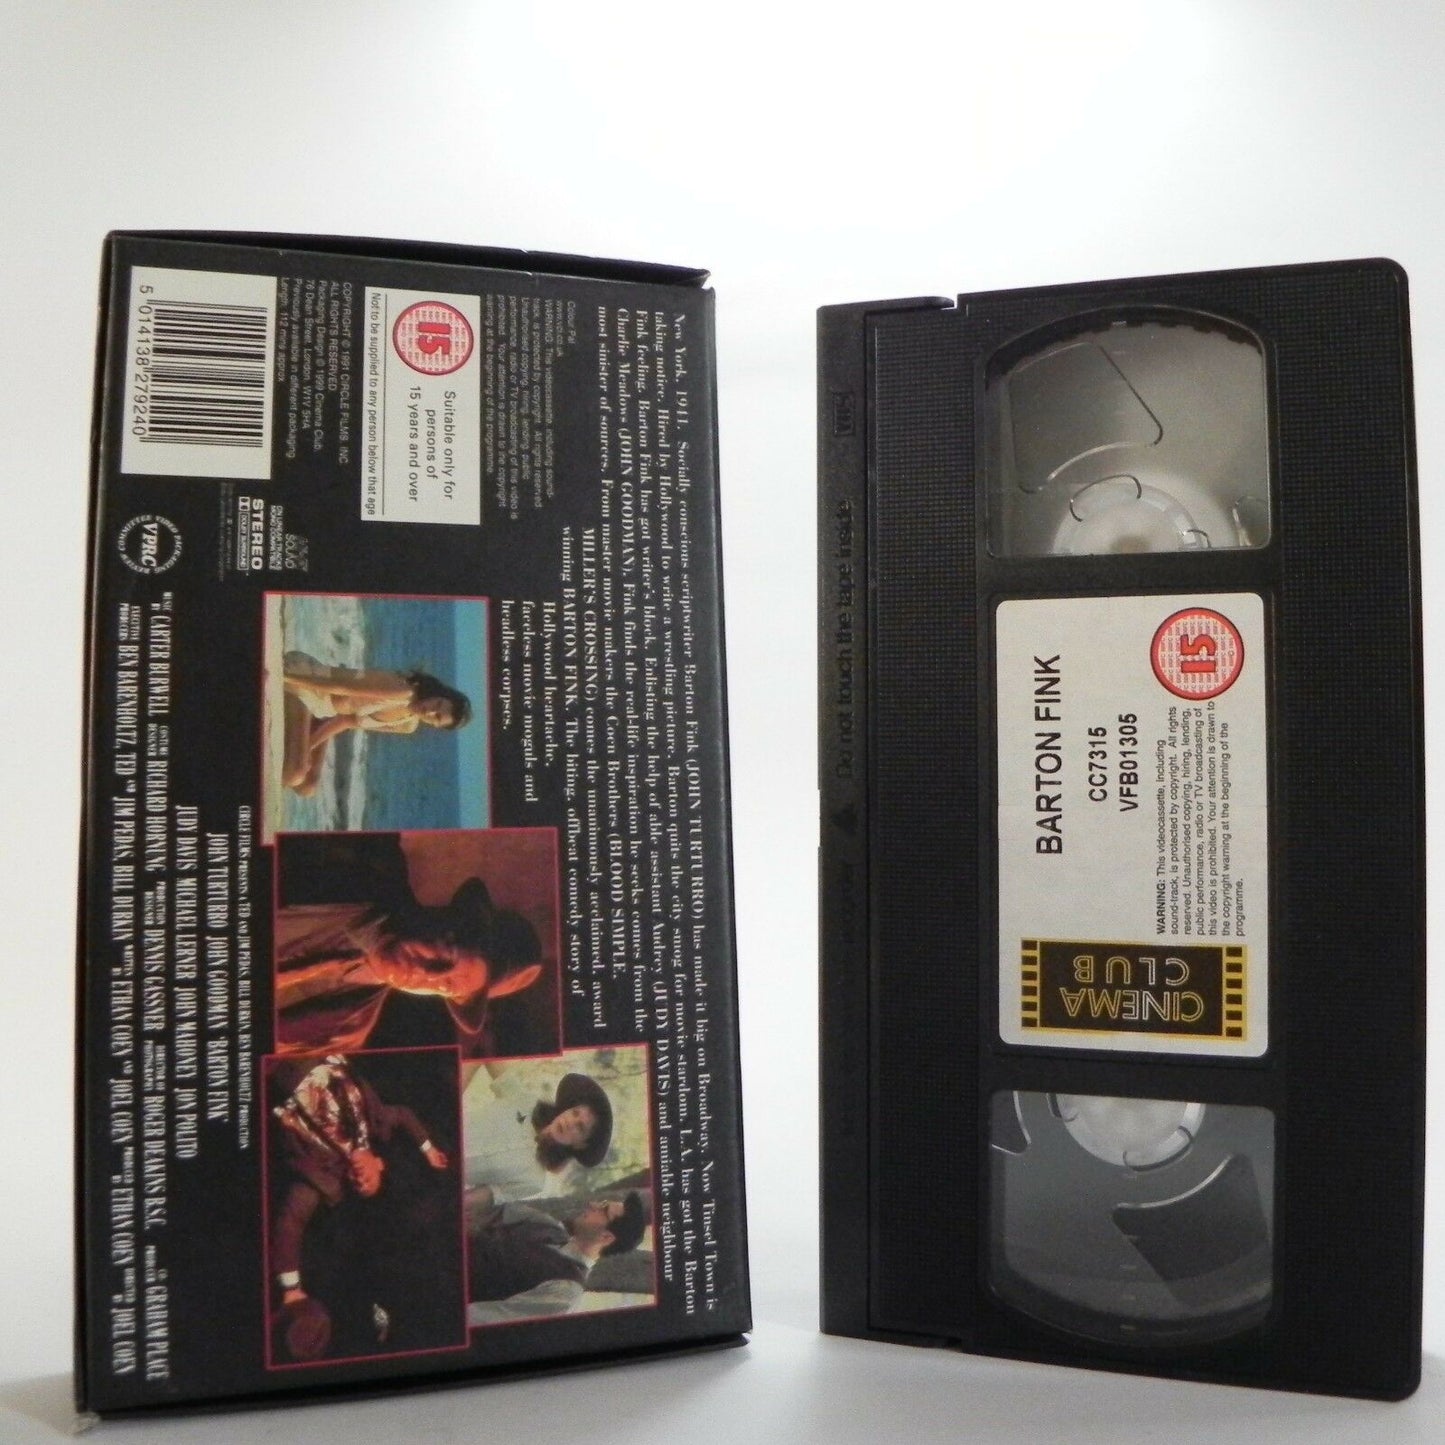 Barton Fink: Film By J. And E.Coen - Comedy/Drama (1991) - J.Goodman - Pal VHS-